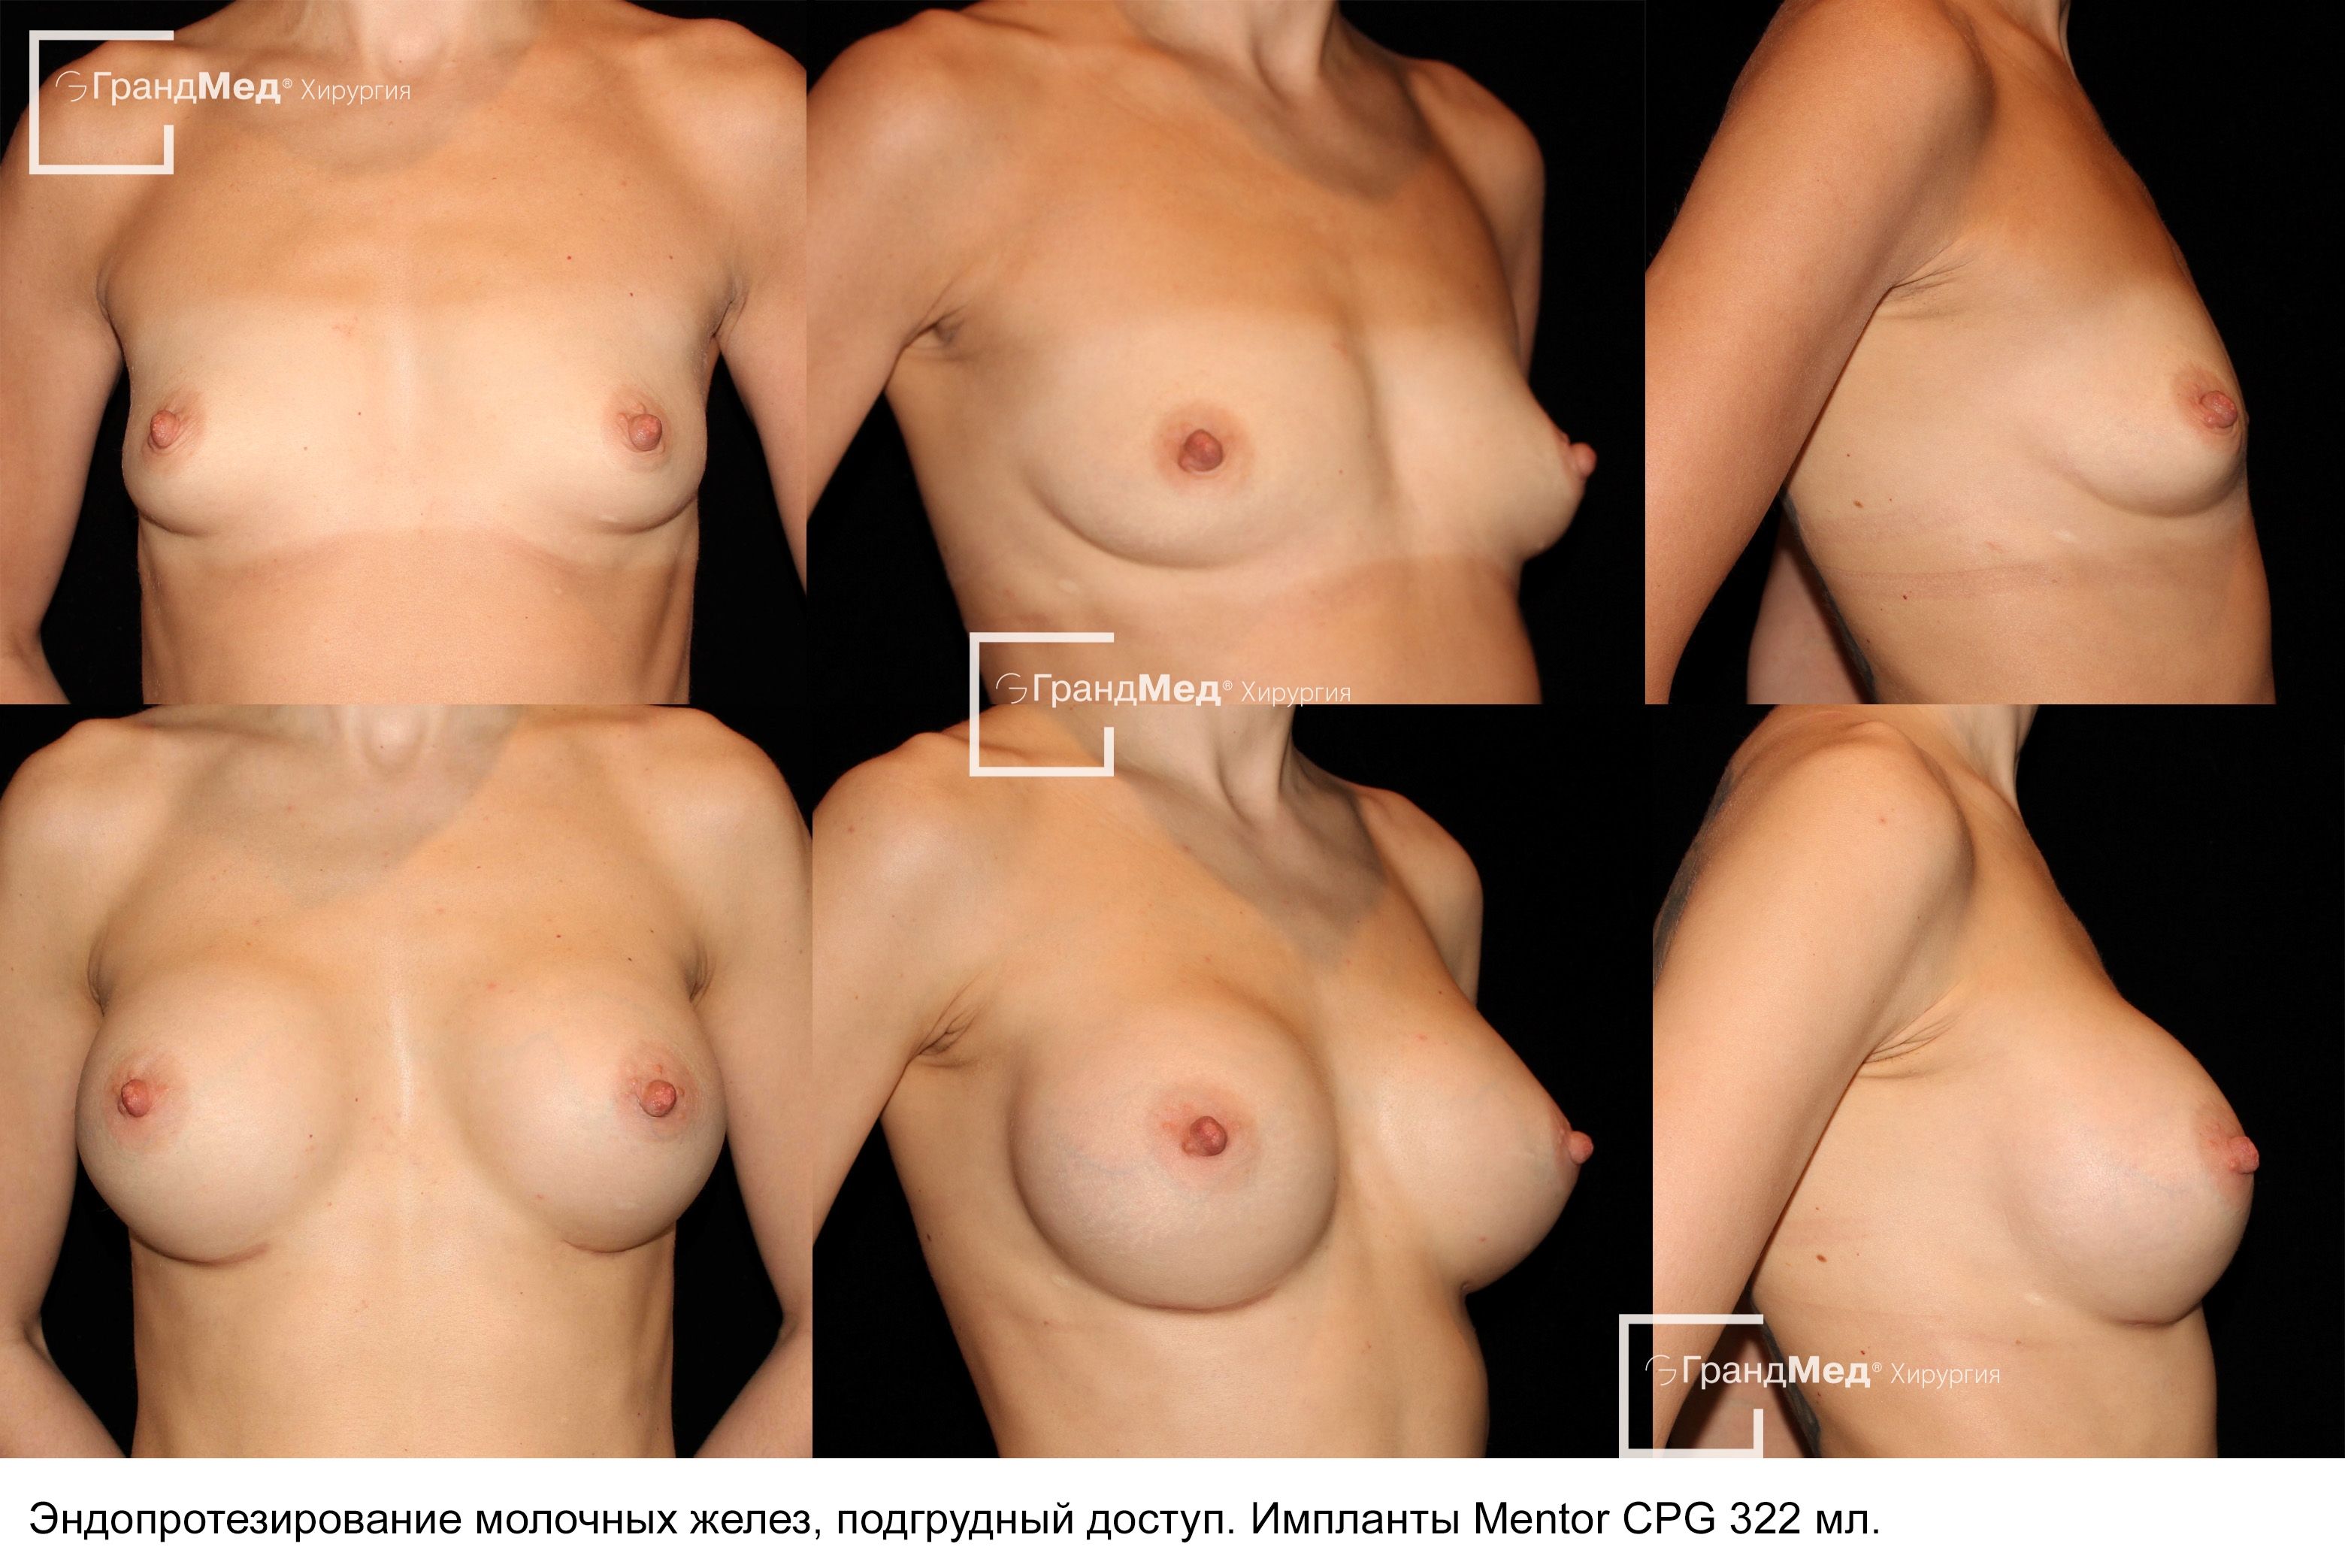 асимметрия груди у мужчин фото 53